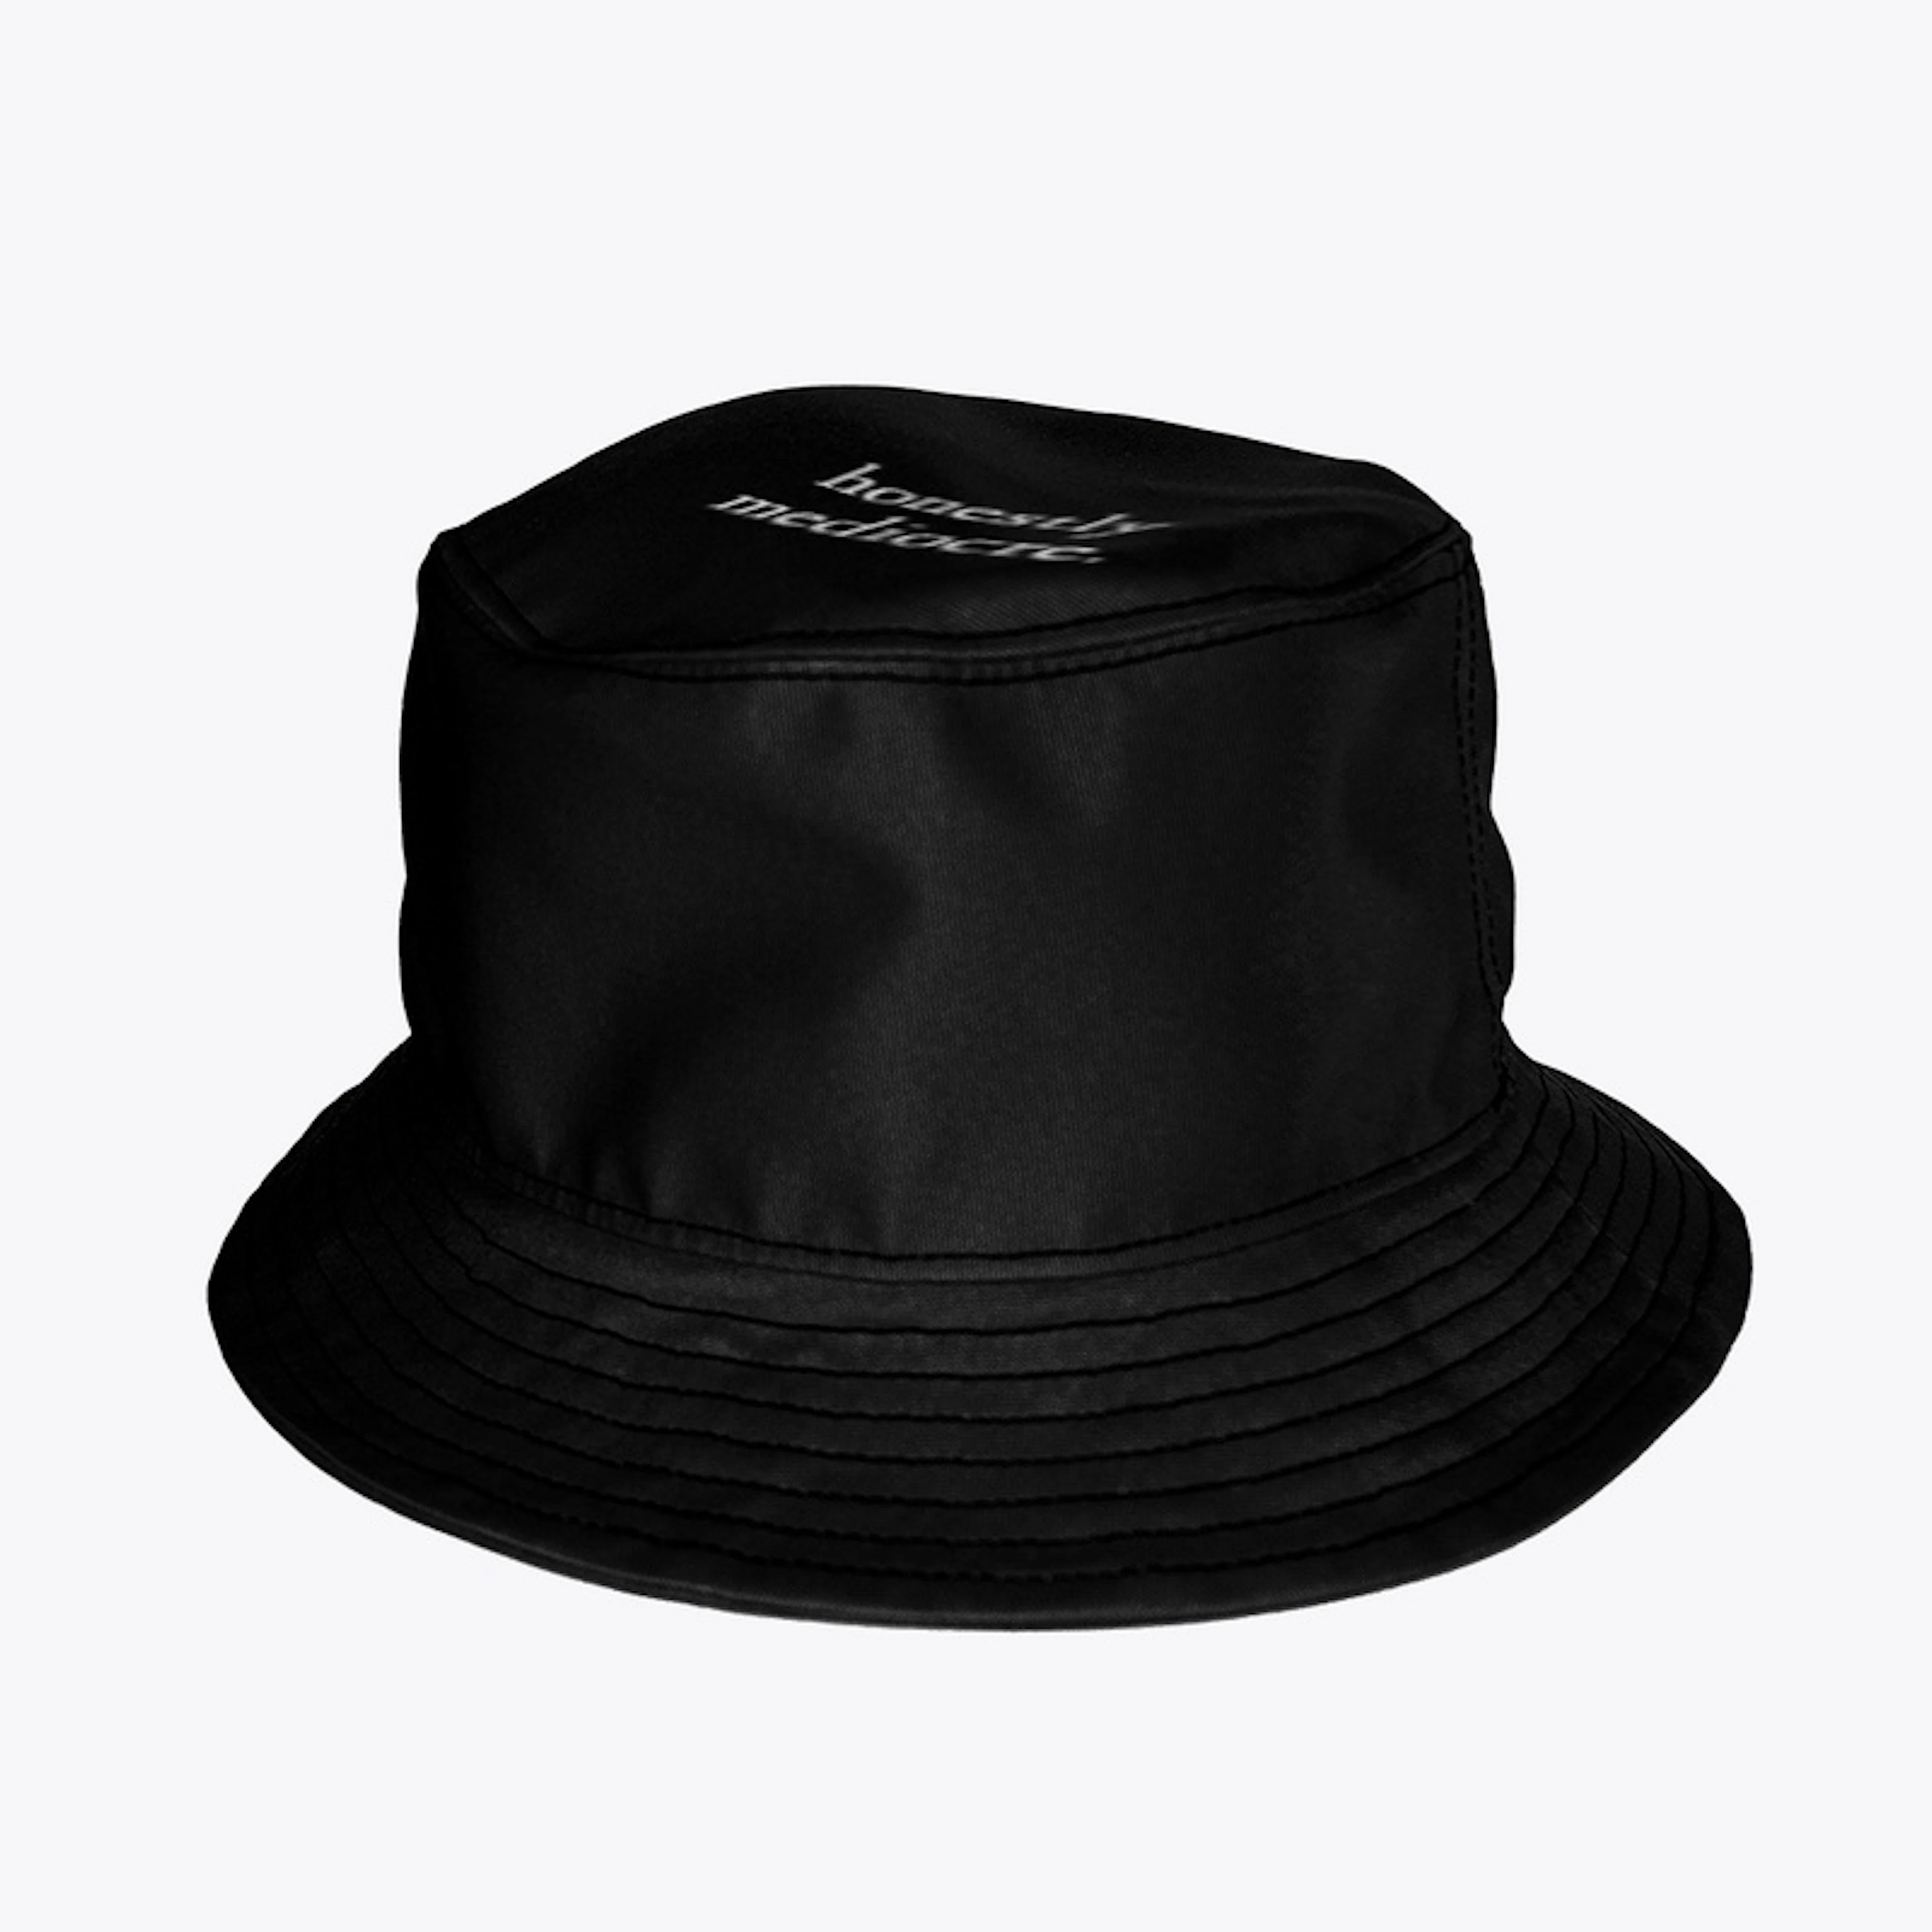 honestly mediocre black bucket hat.